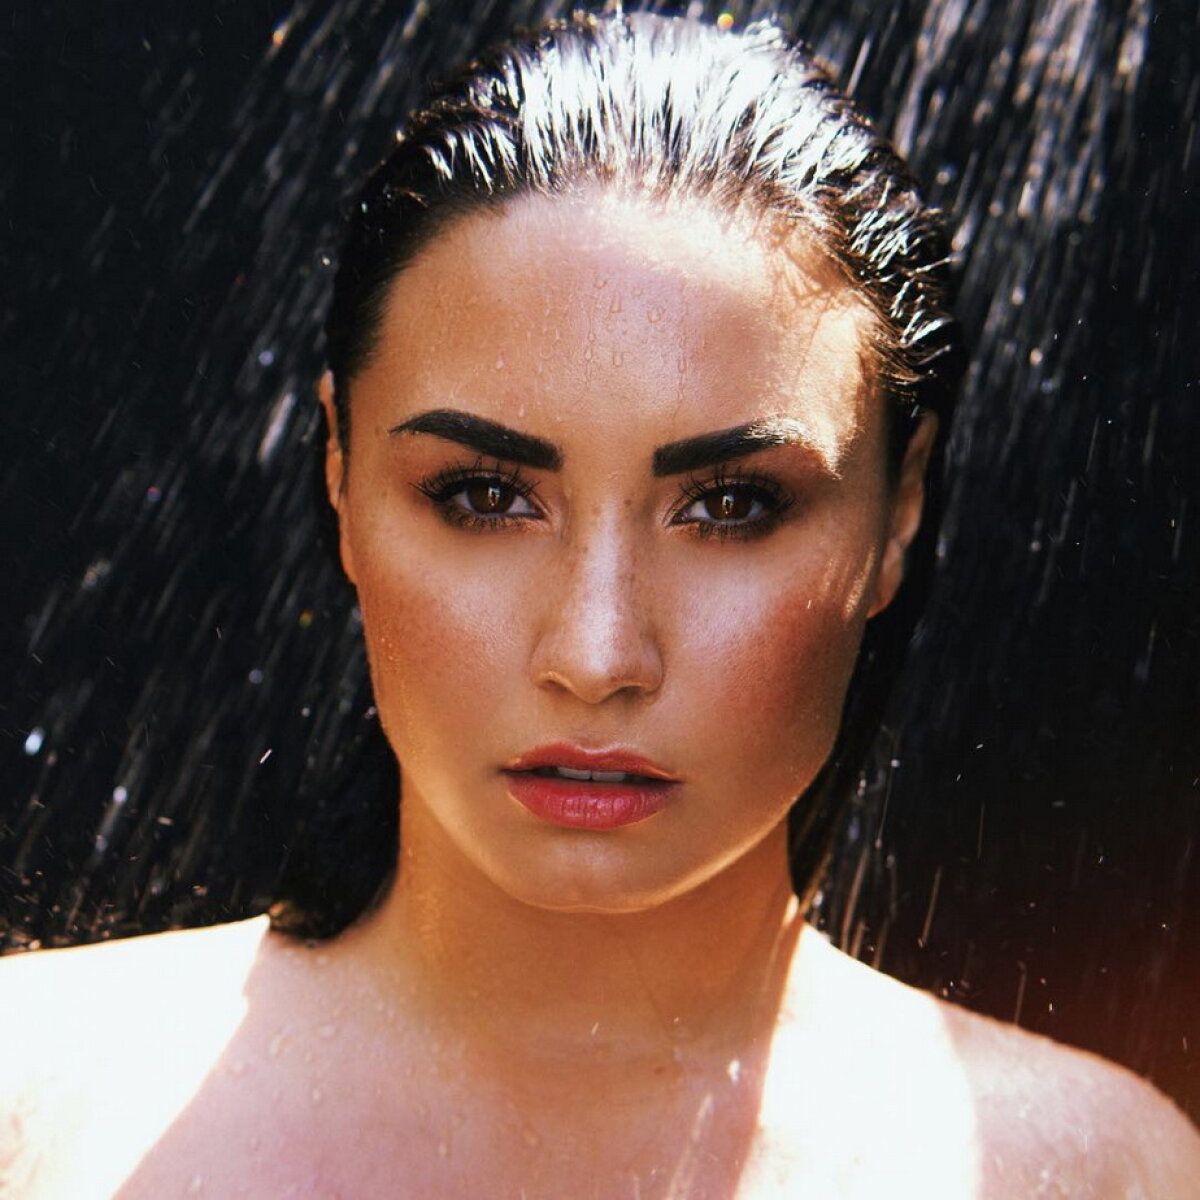 GALERIE FOTO Demi Lovato, fotografii incendiare pe internet